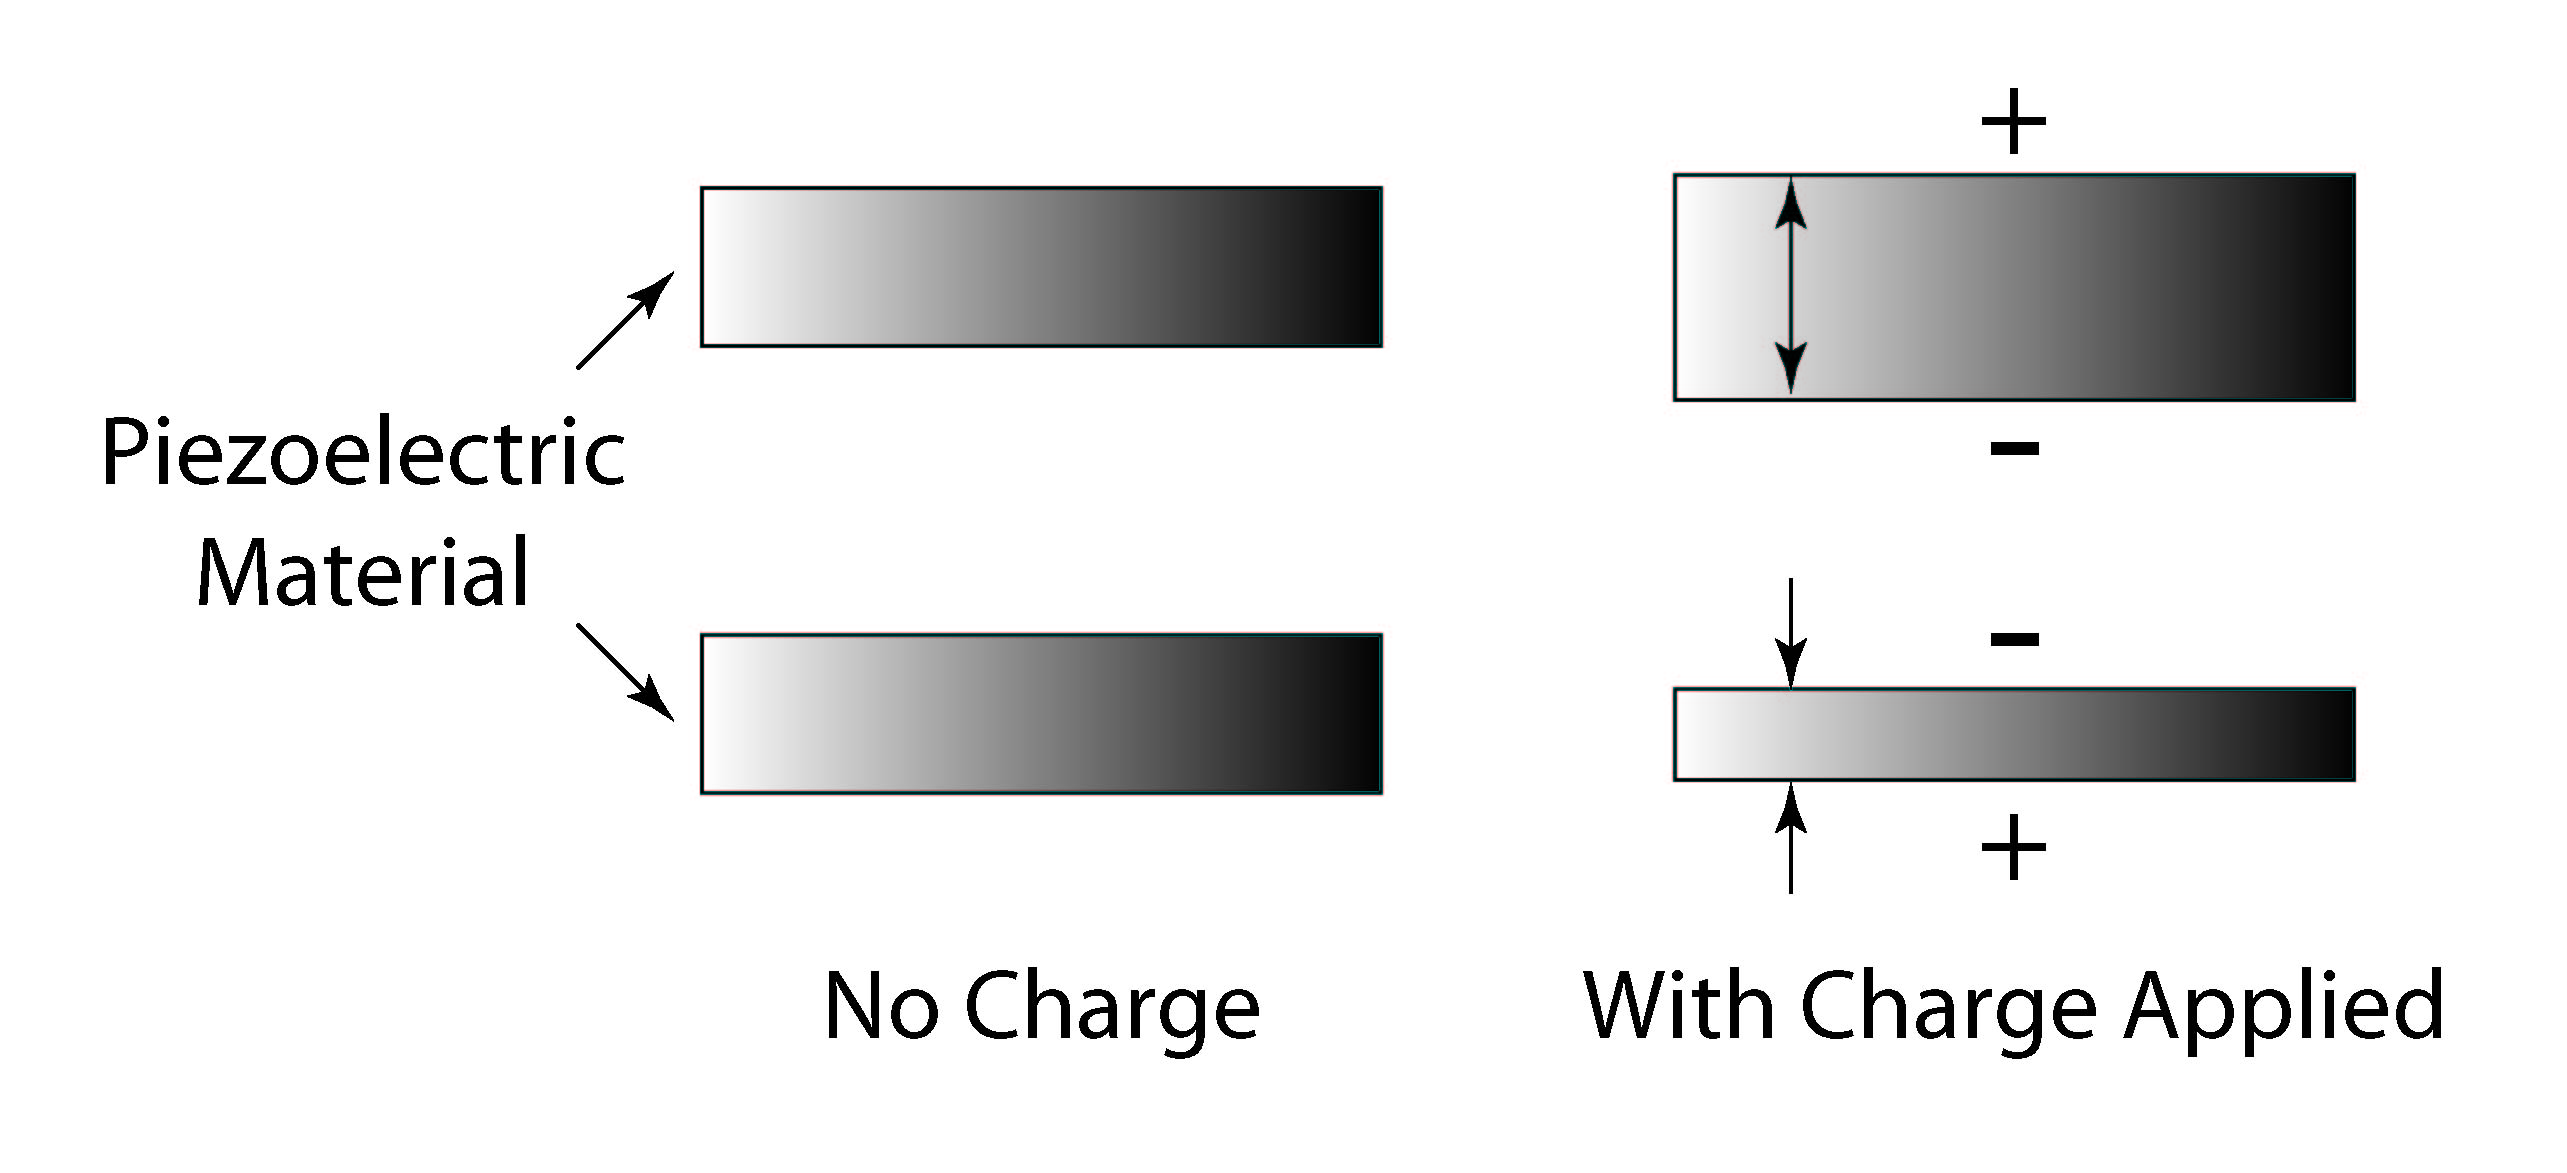 Piezoelectric Principle